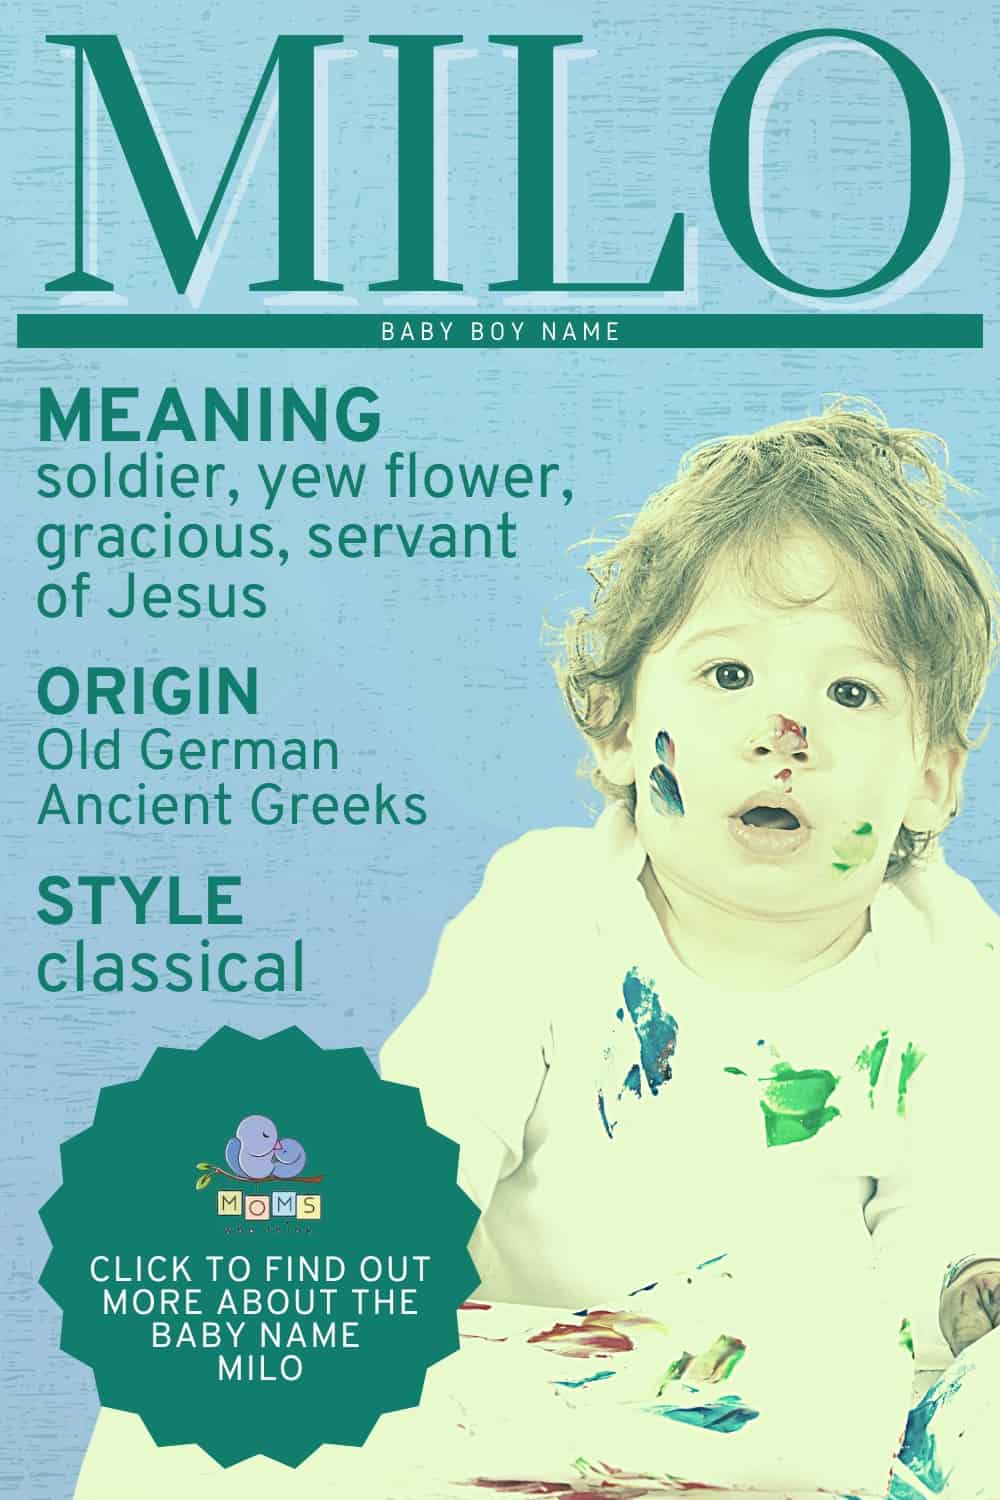 Baby name Milo